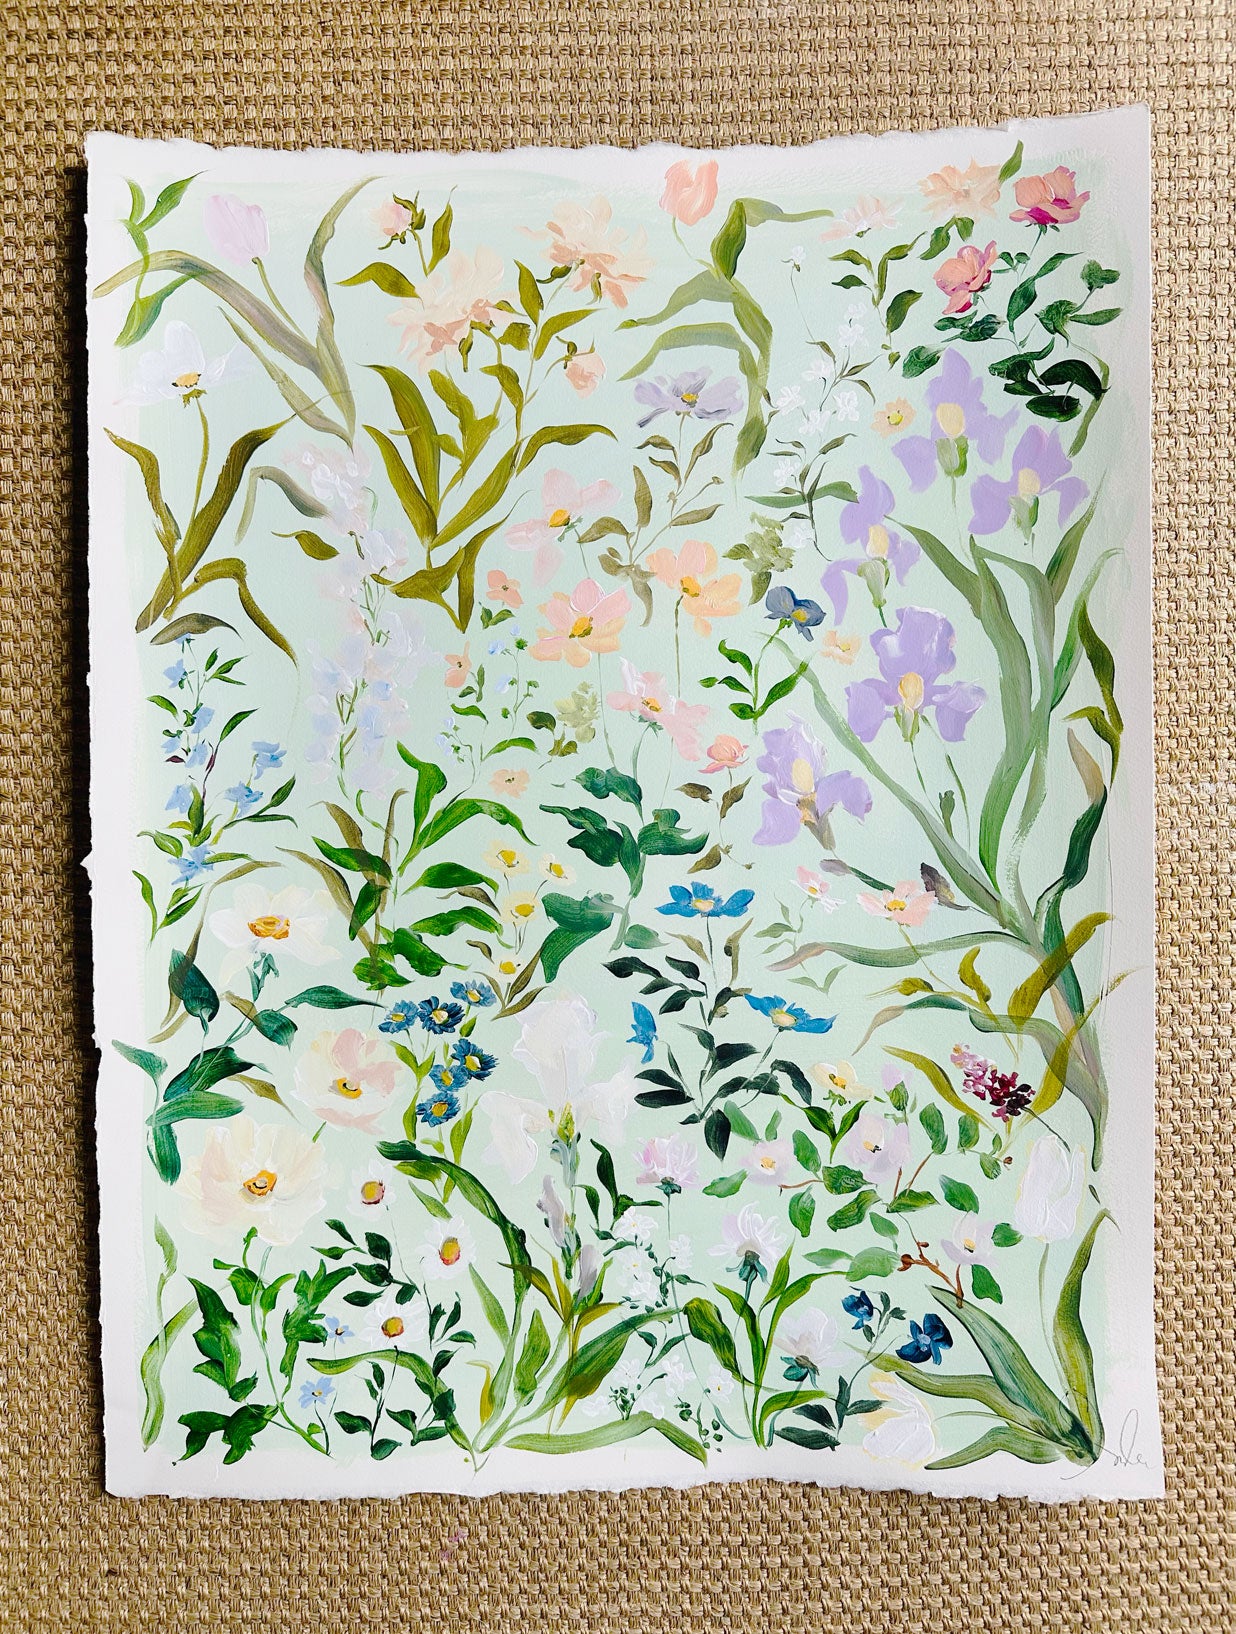 Ophelia's Garden: Acrylic on Paper